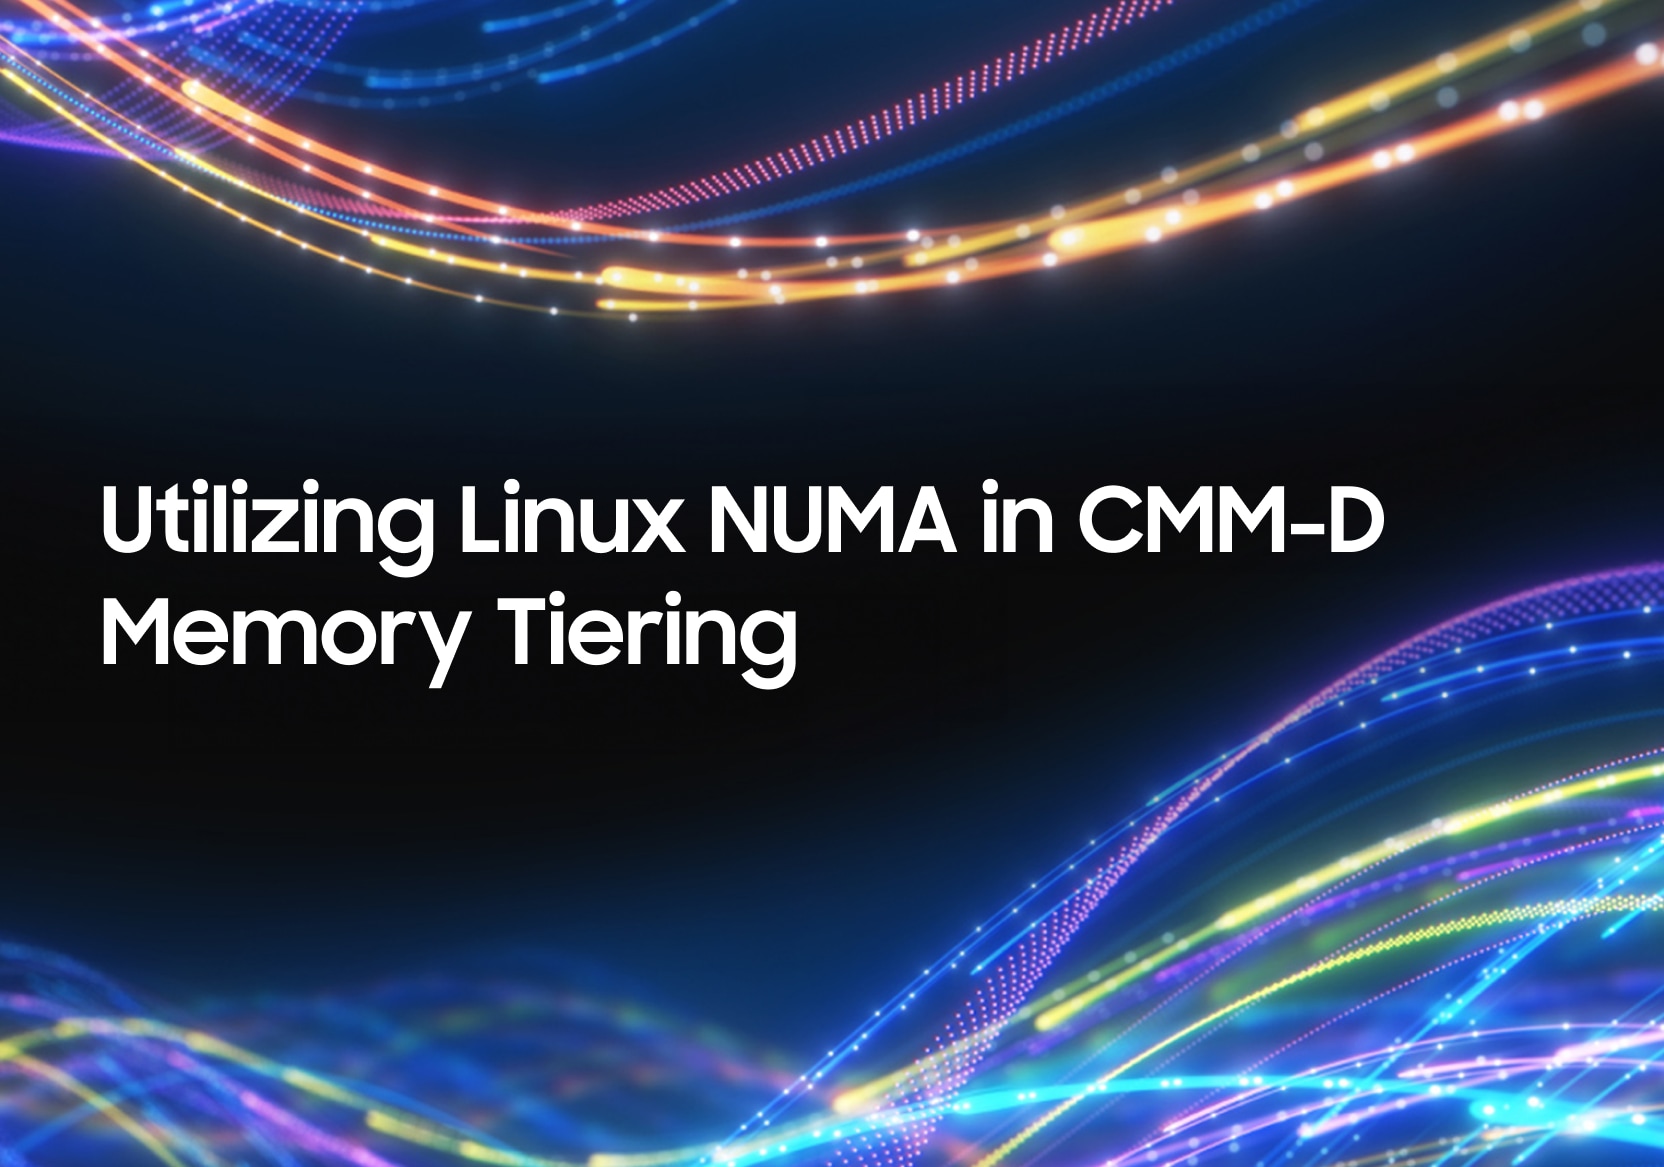 CMM-DにおけるLinux NUMAの活用:メモリーティアリング